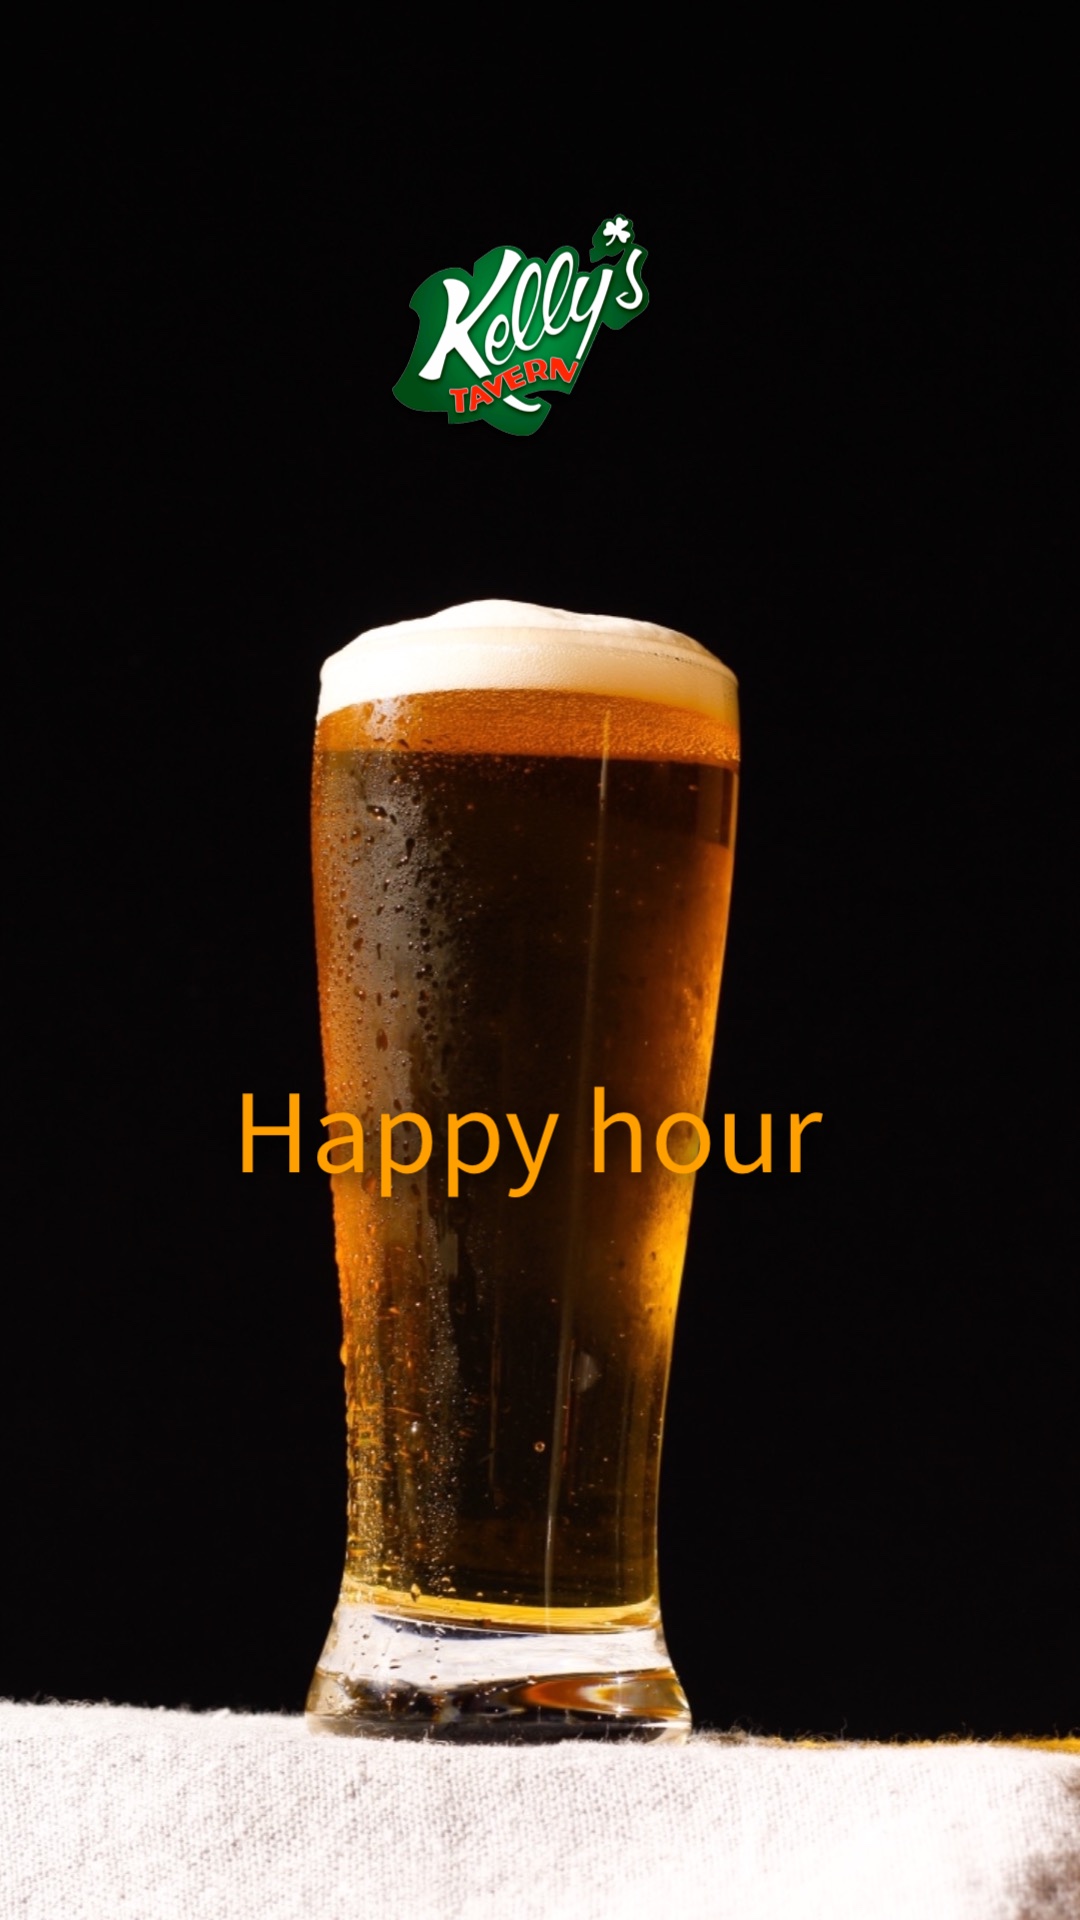 #Tableware #Drinkware #Beer #Liquid #Barware #Beer glass #Alcoholic beverage #Drink #Pint glass #Ice beer